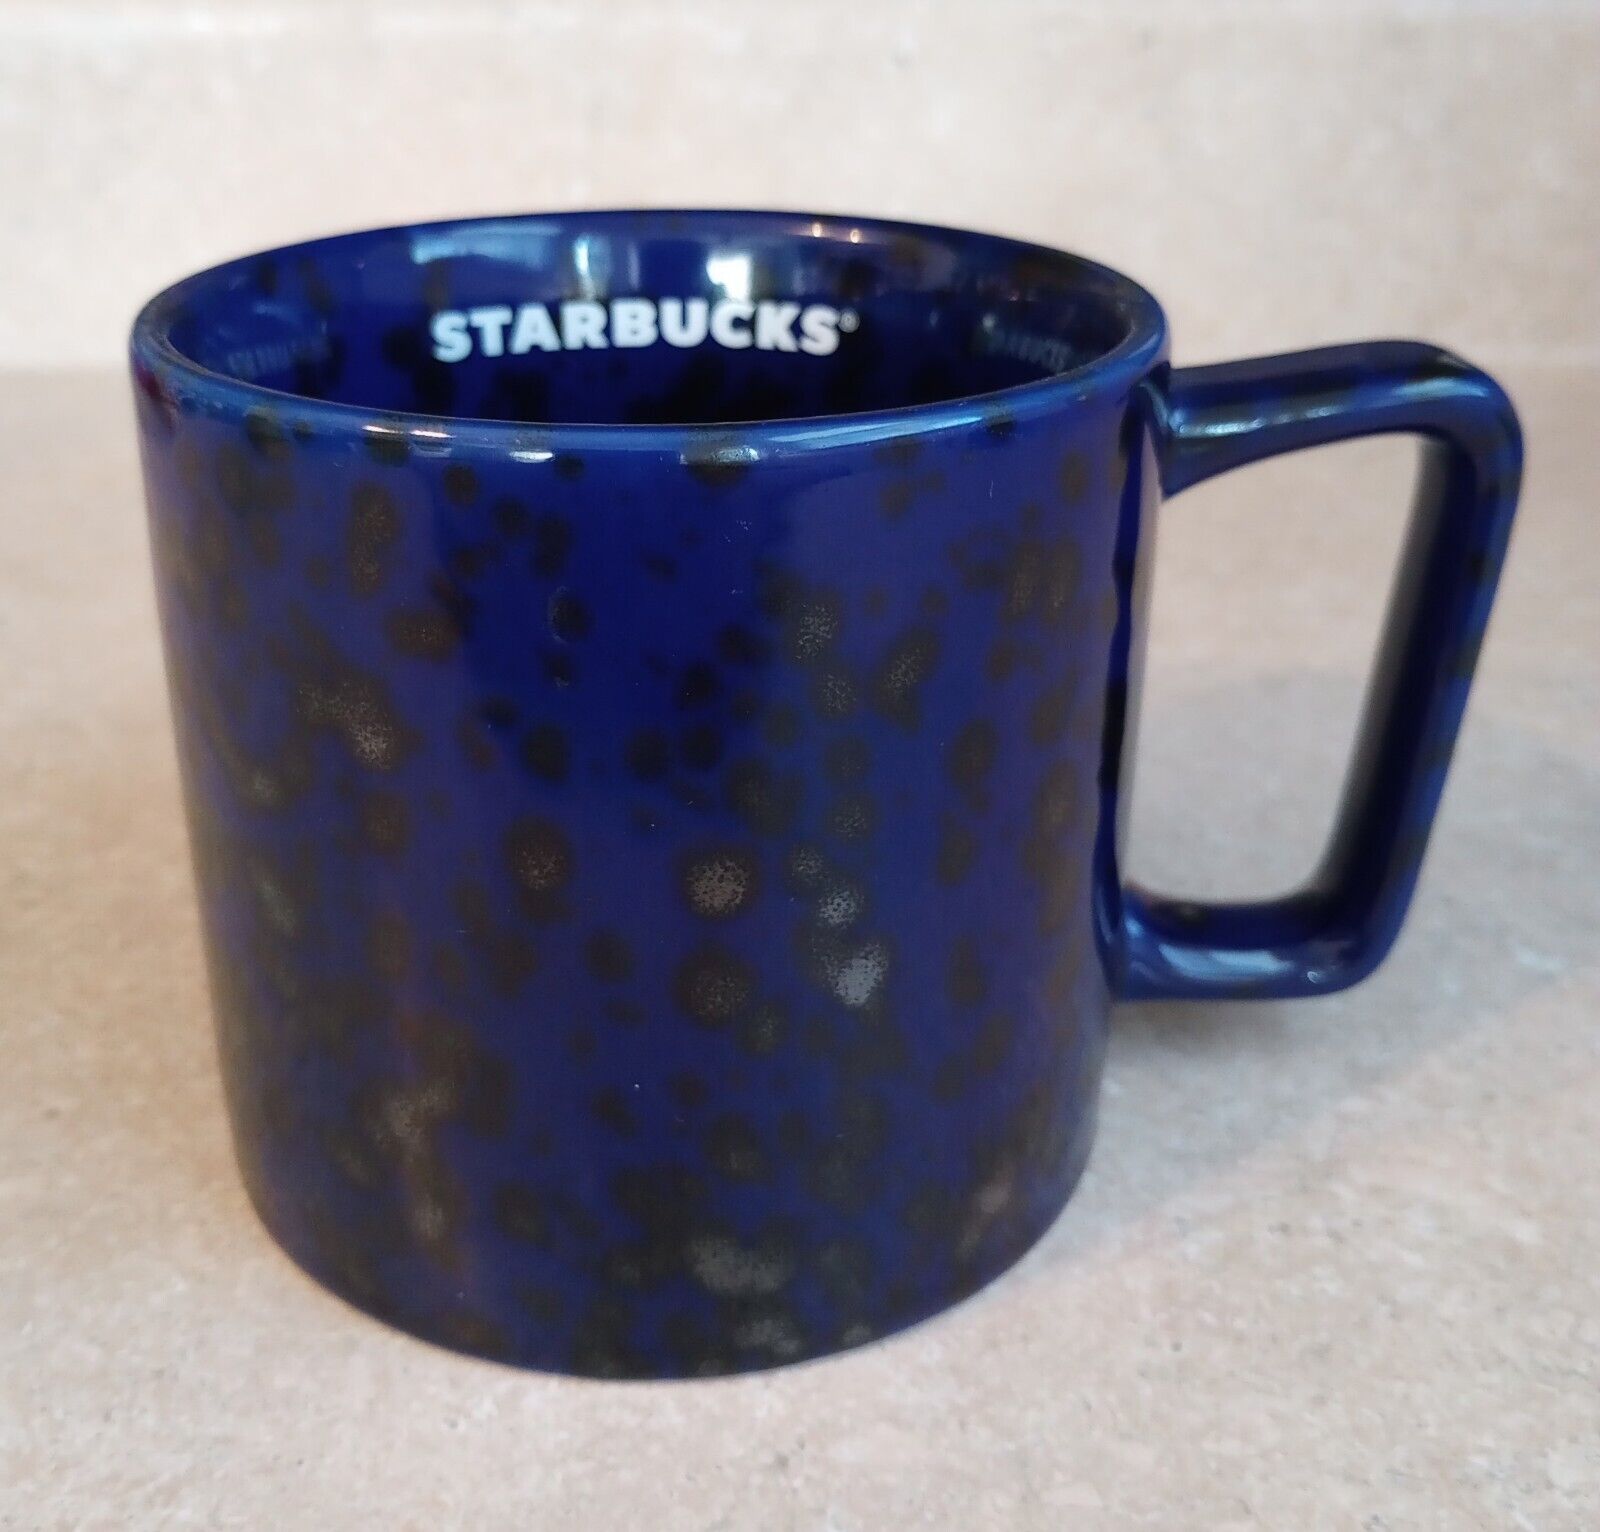 Starbucks Ceramic Coffee Mug Cobalt Blue Metallic Speckled 14 oz. 2020